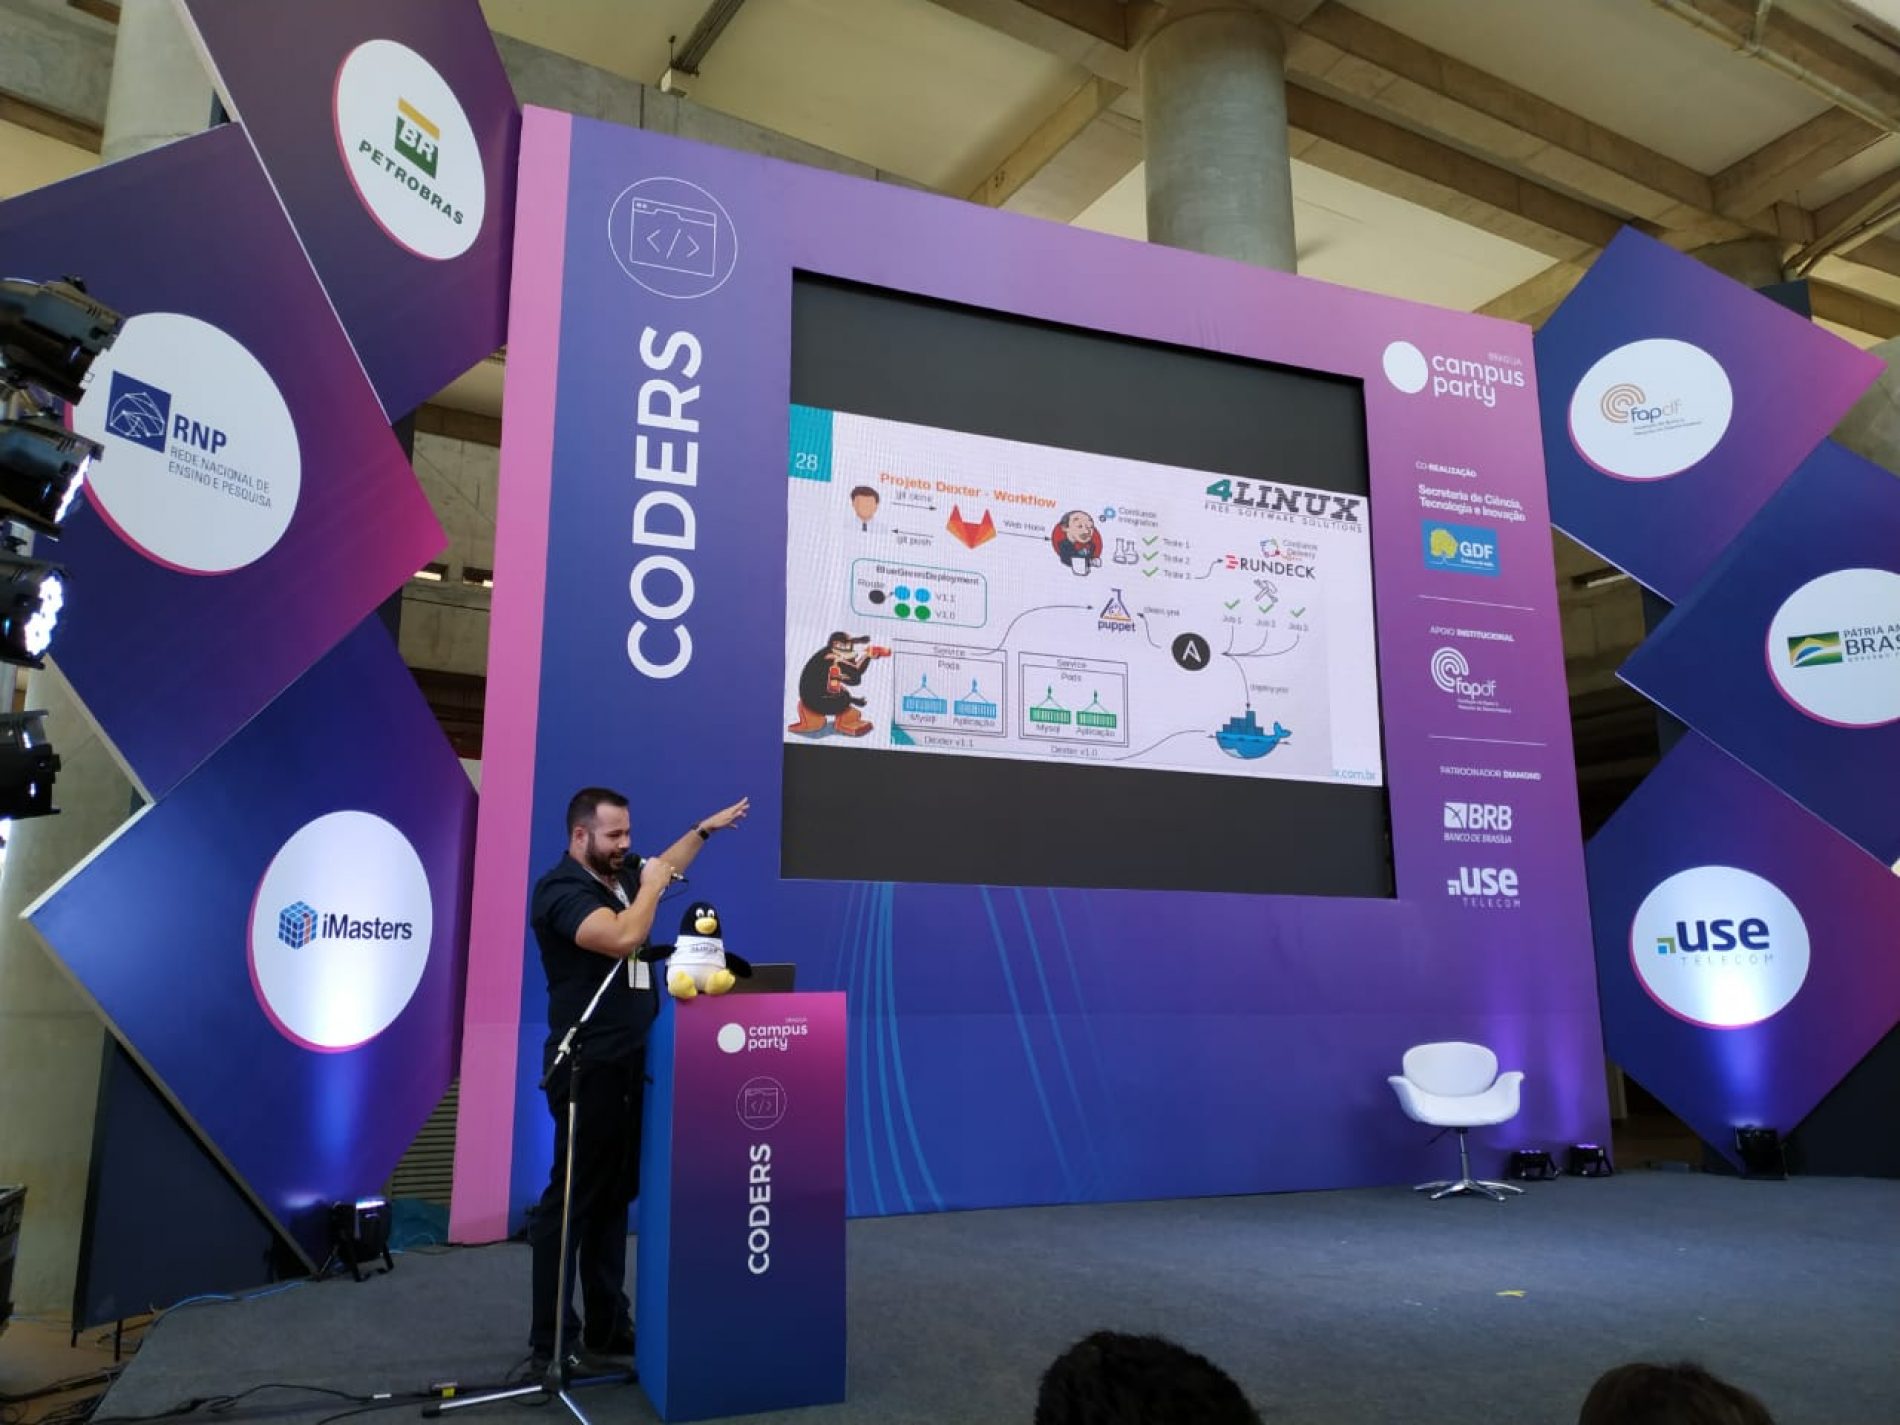 Palestra: Infra Ágil para Gerenciar mais de 100 mil máquinas – Campus Party BSB 2019!